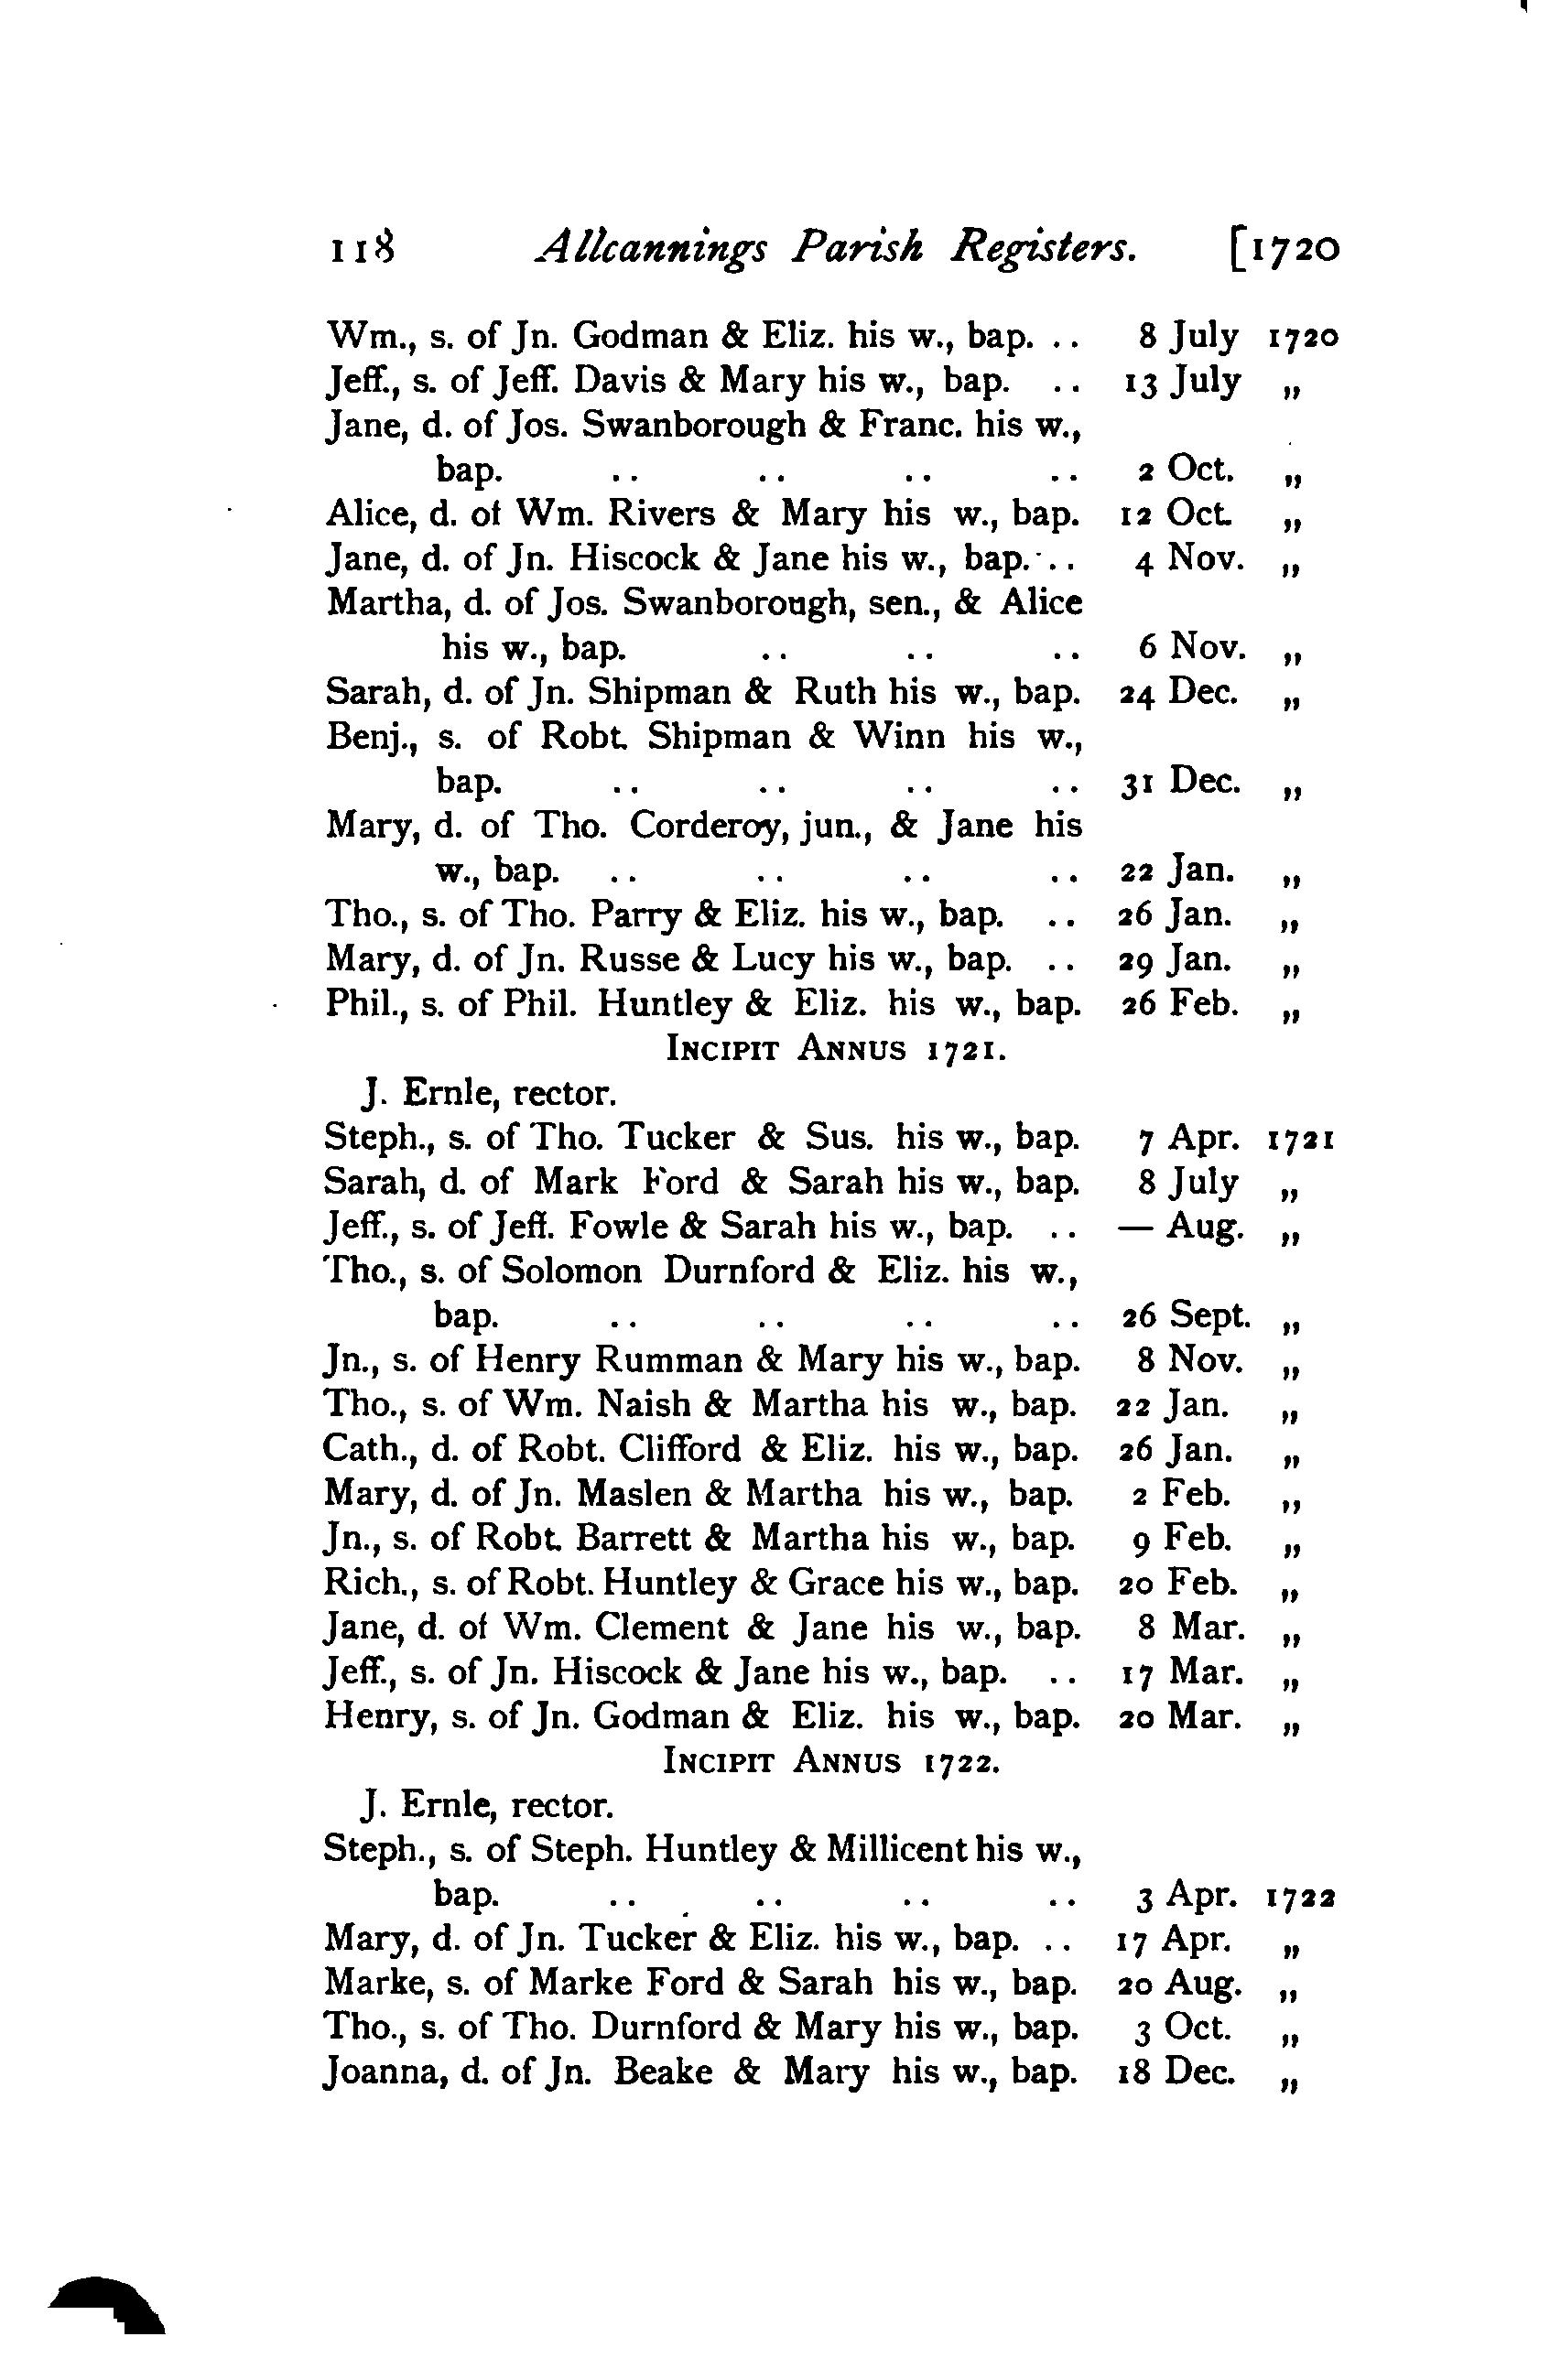 1905 Transcript showing baptism of Martha Swanborough in 1720